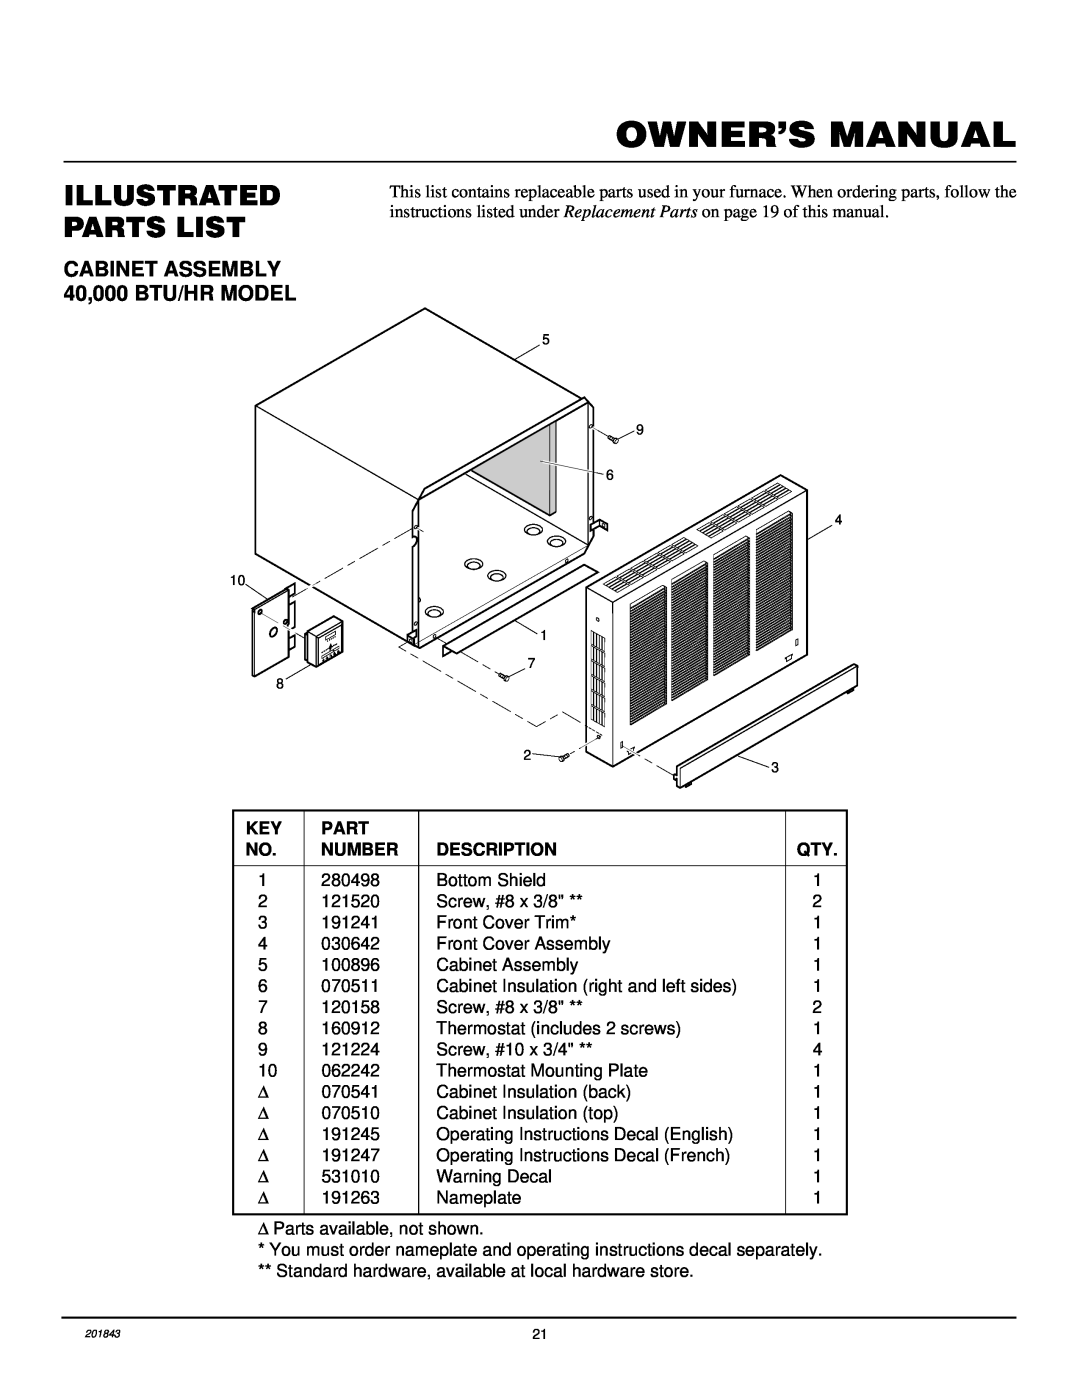 Williams 4003531, 2503531 installation manual Illustrated Parts List, CABINET ASSEMBLY 40,000 BTU/HR MODEL 